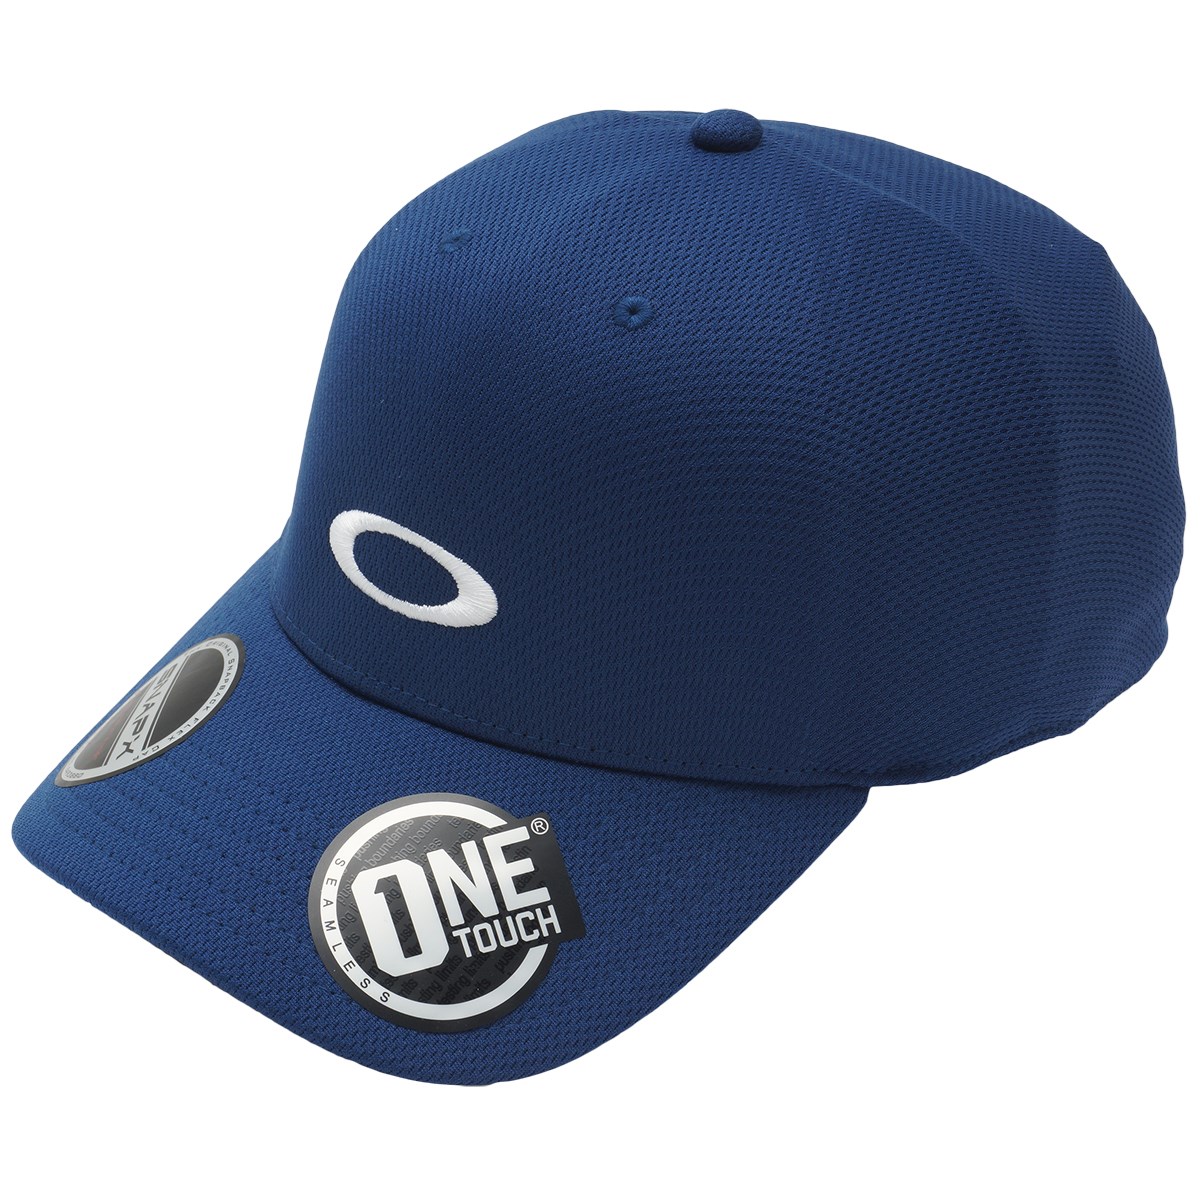 Dショッピング オークリー Oakley Tech キャップ L Xl ダークブラッシュ カテゴリ 帽子 バイザーの販売できる商品 Gdoゴルフショップ ドコモの通販サイト